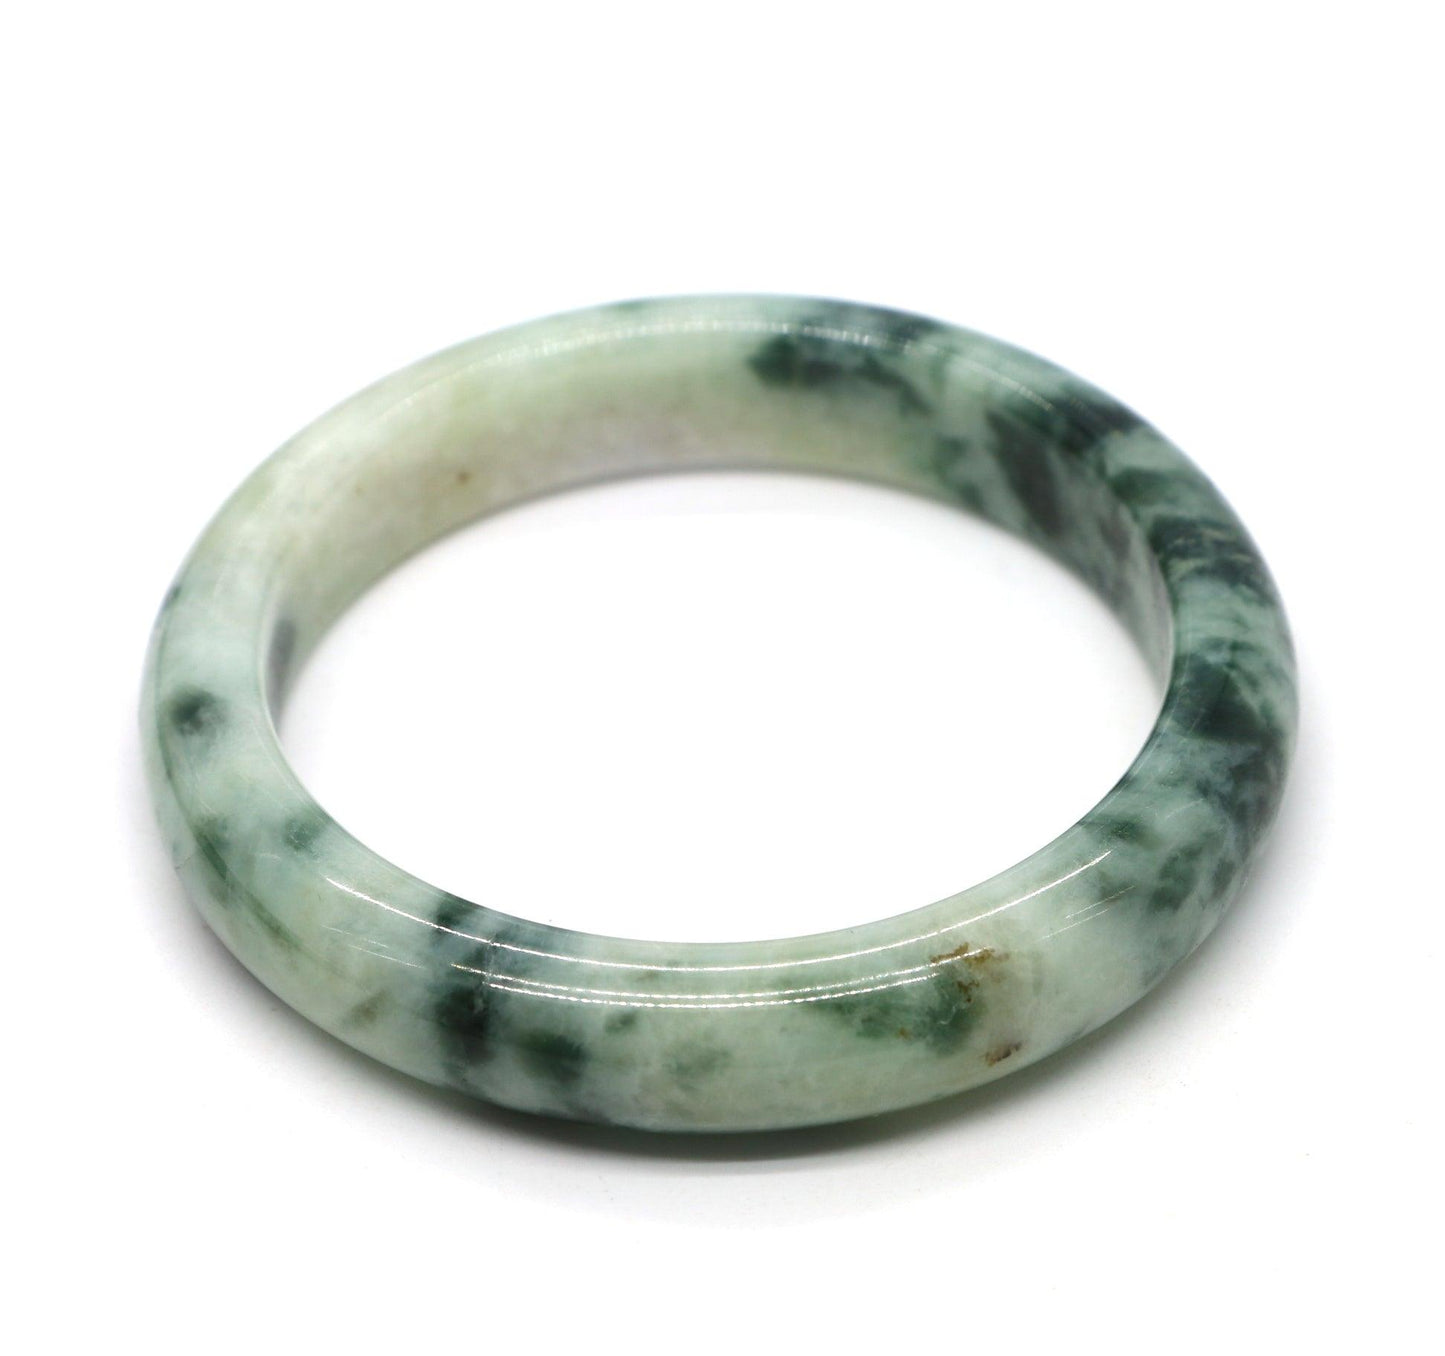 Type A Certified Jadeite Jade Bangle Size 56 -58mm B0BN7VDZDL - Jade-collector.com